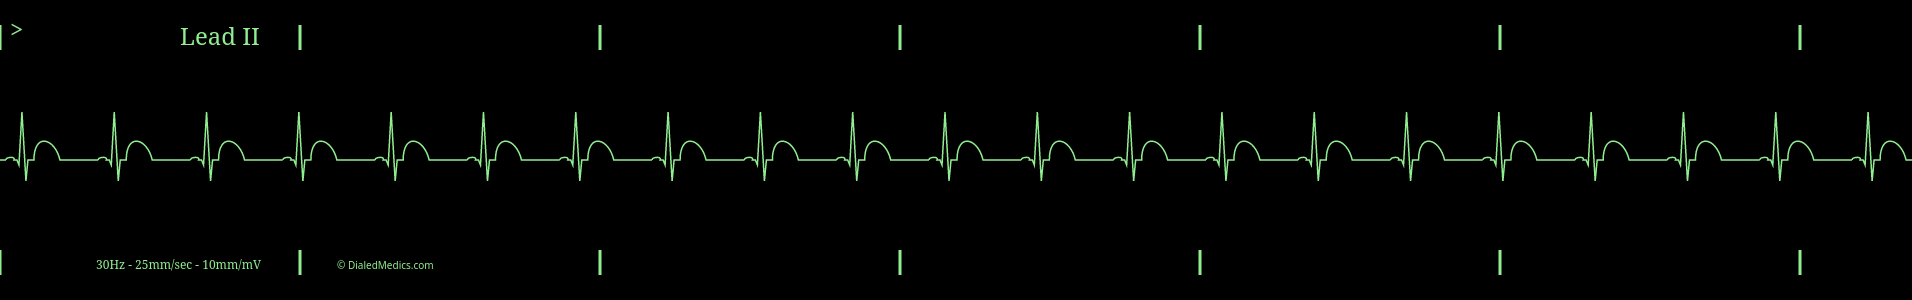 Cardiac monitor capture of Regular Sinus Rhythm at 65bpm.